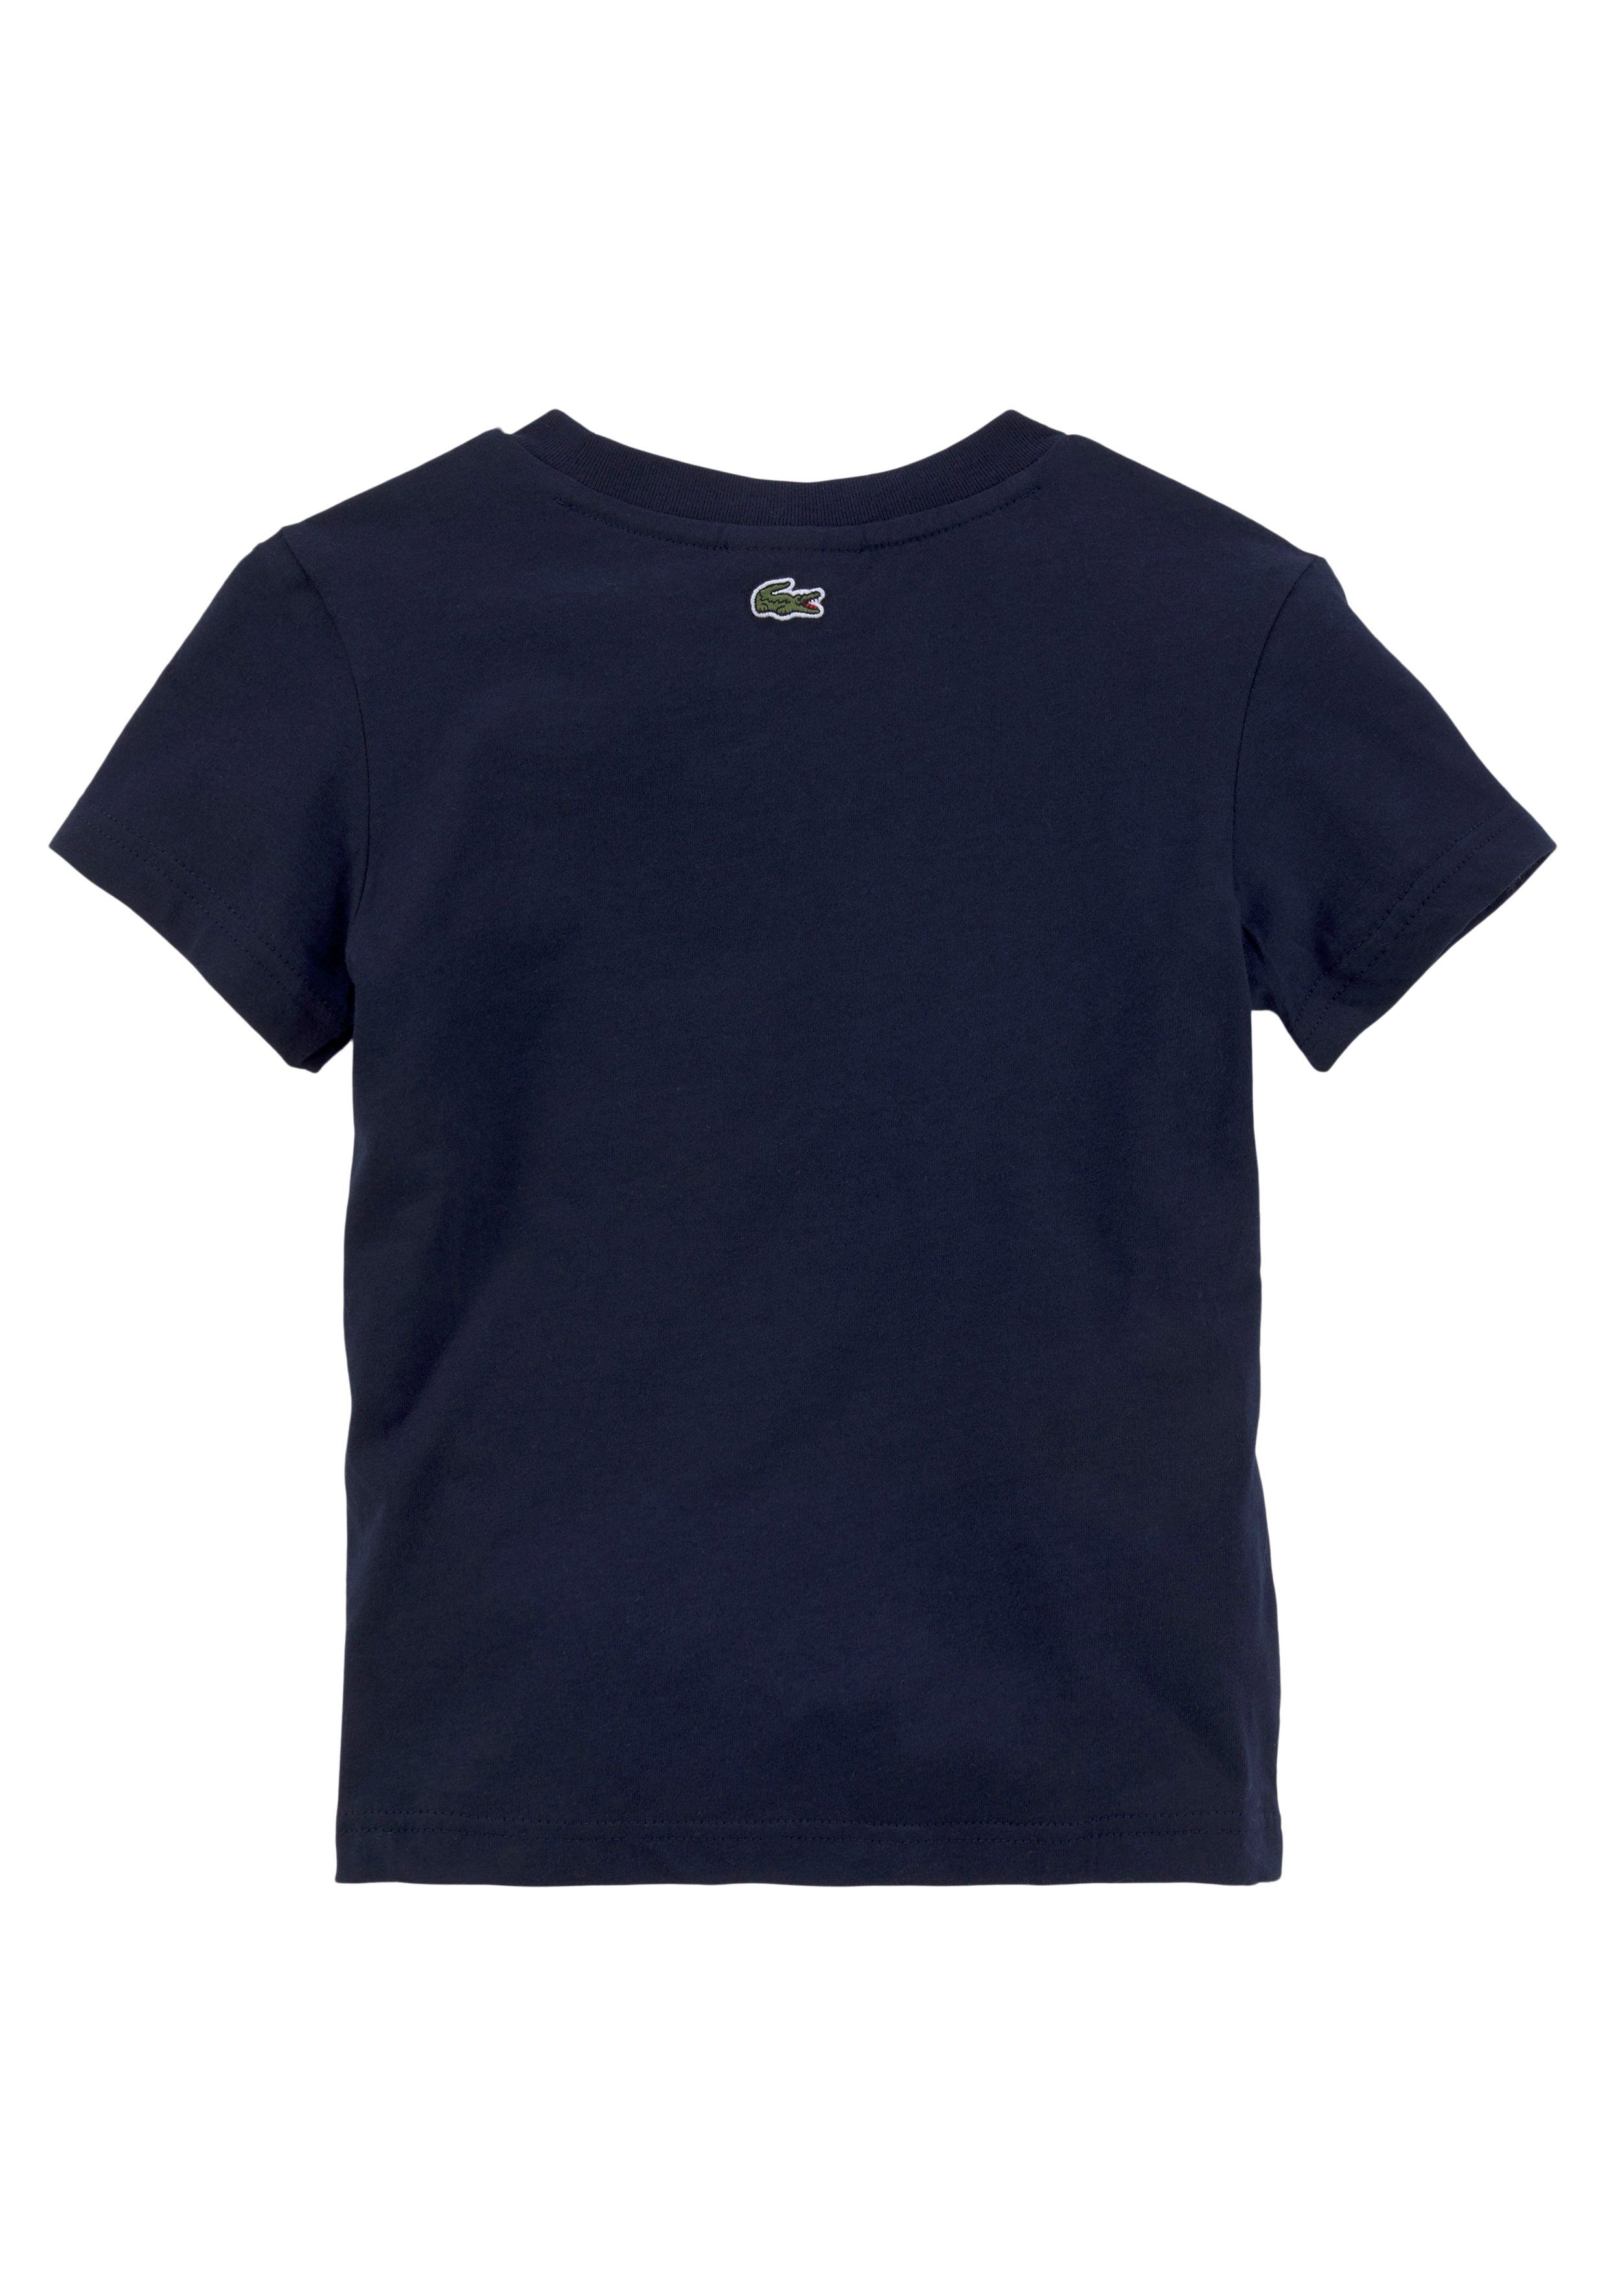 blue Lacoste mit navy T-Shirt großem Logodruck